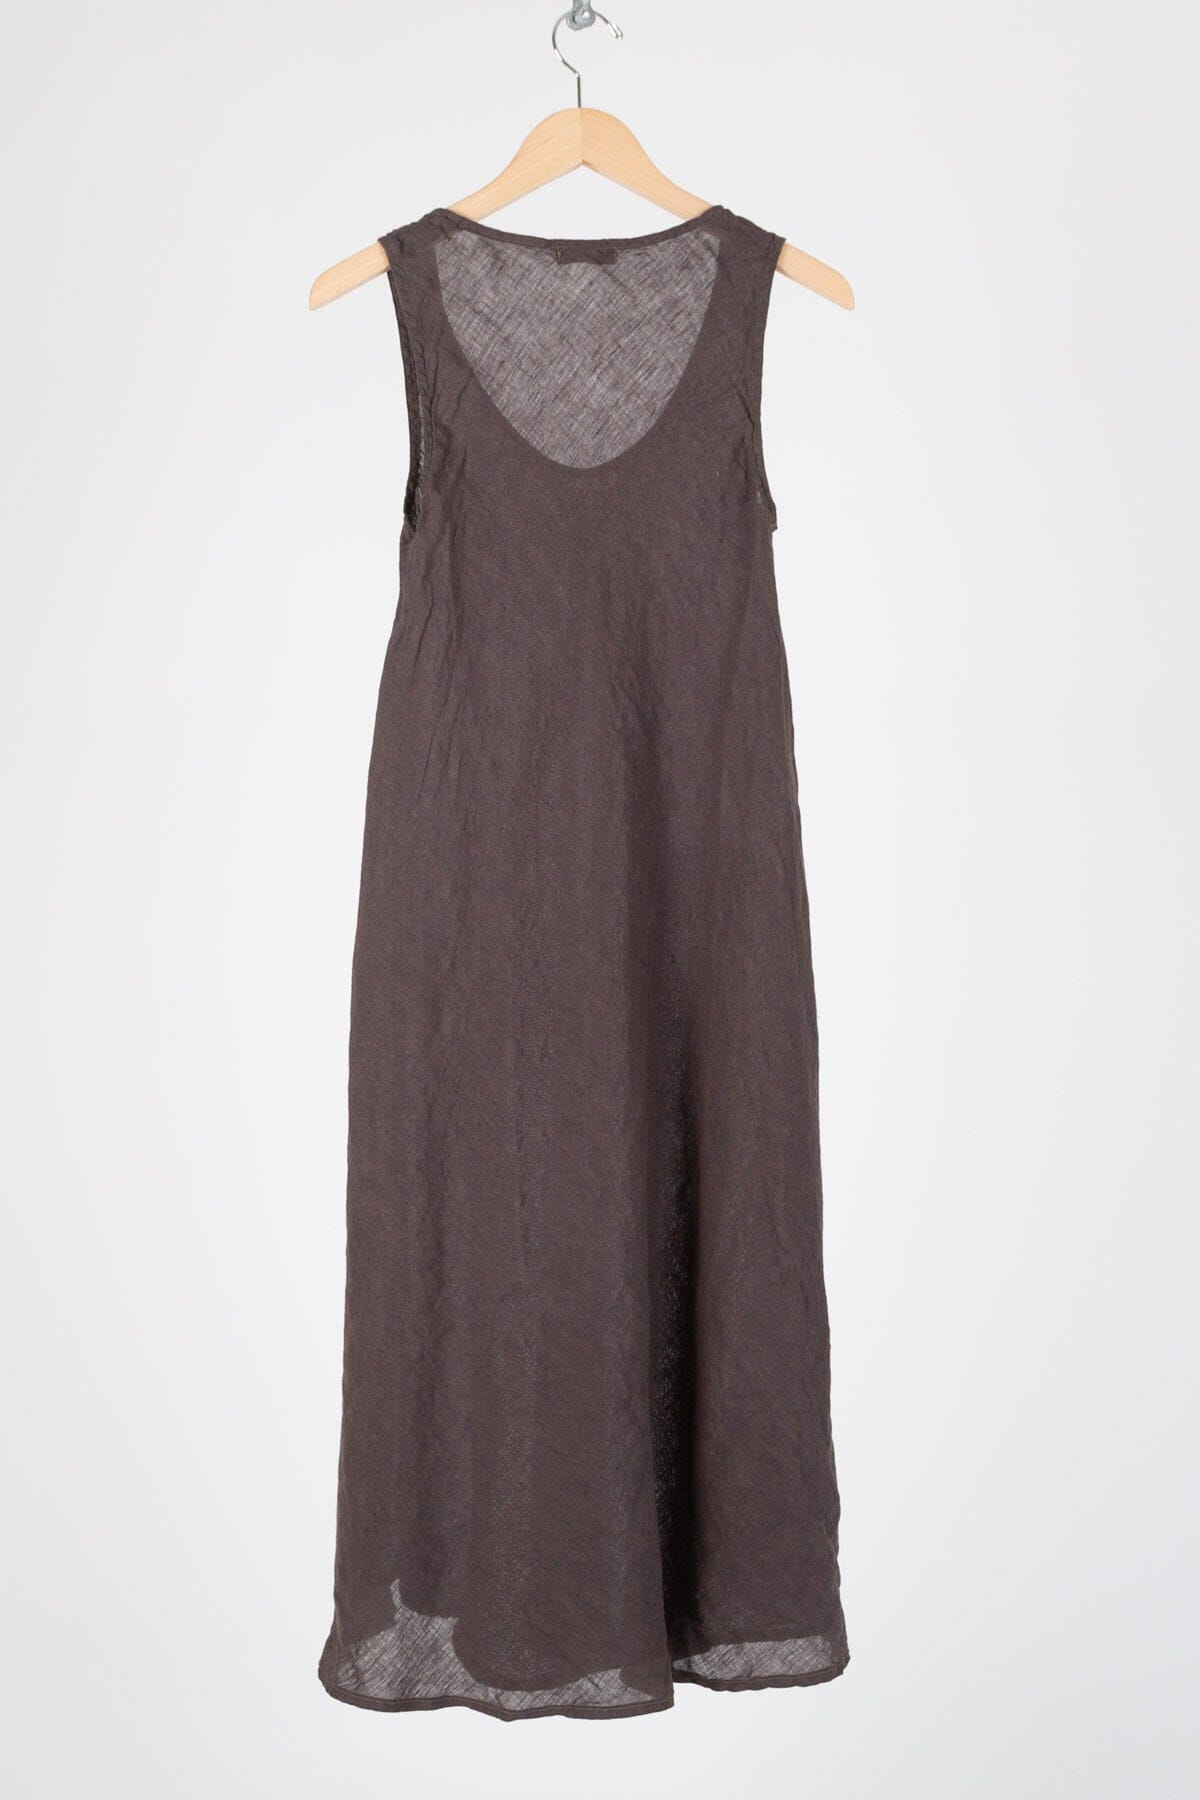 Bree - Iridescent Linen S15 - Iridescent Skirts/Dresses CP Shades 